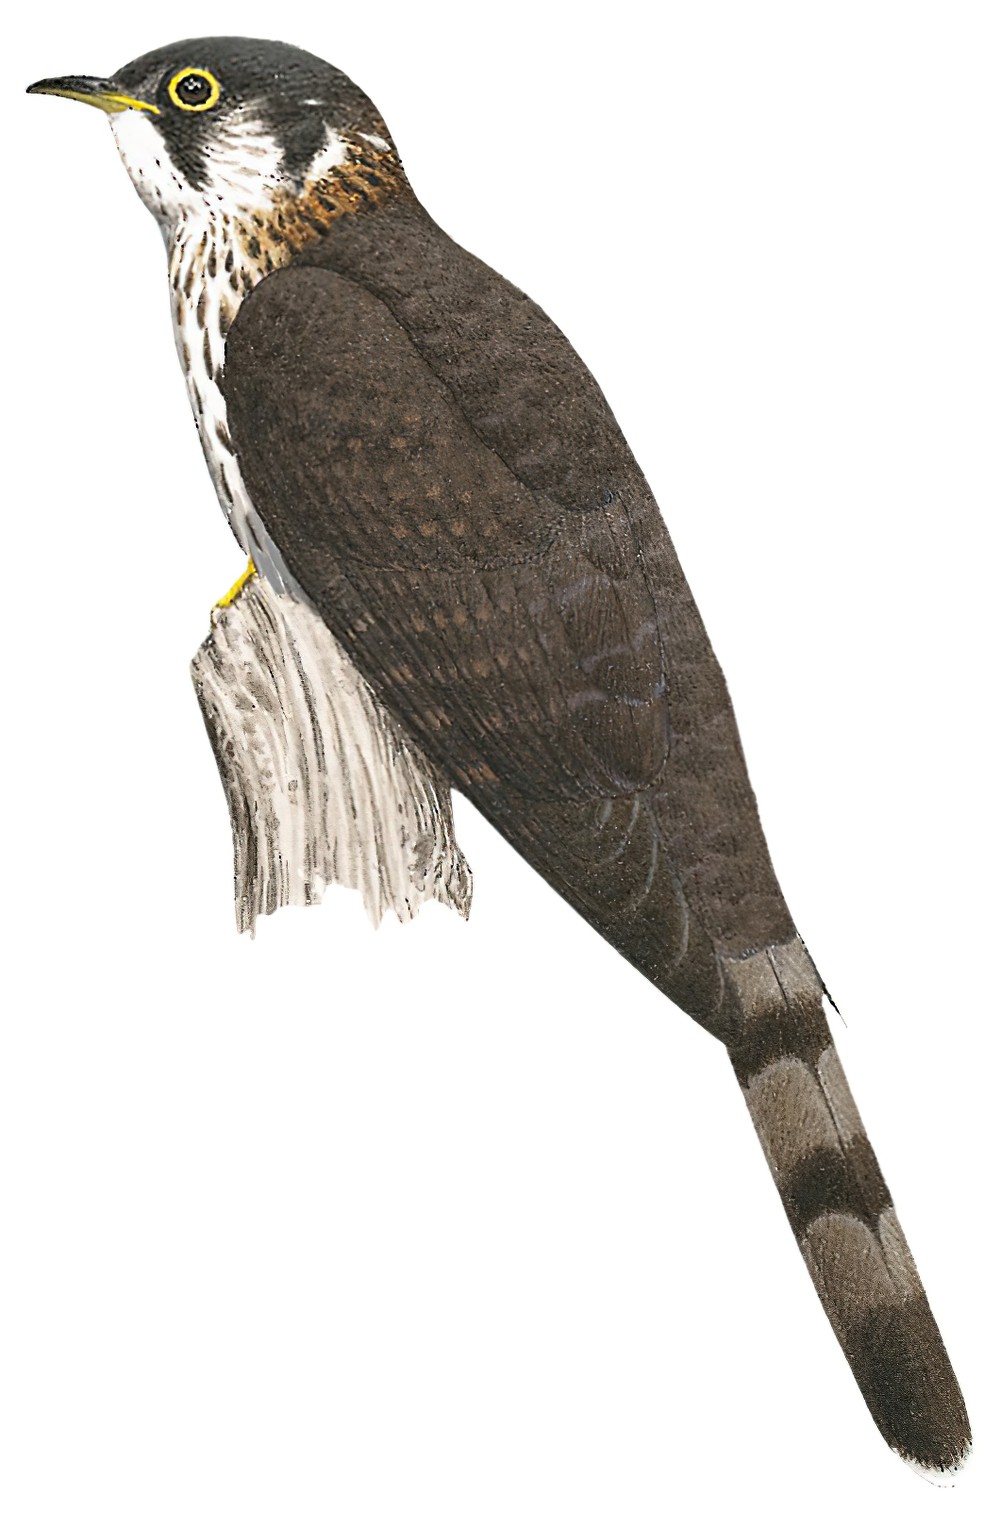 Moustached Hawk-Cuckoo / Hierococcyx vagans